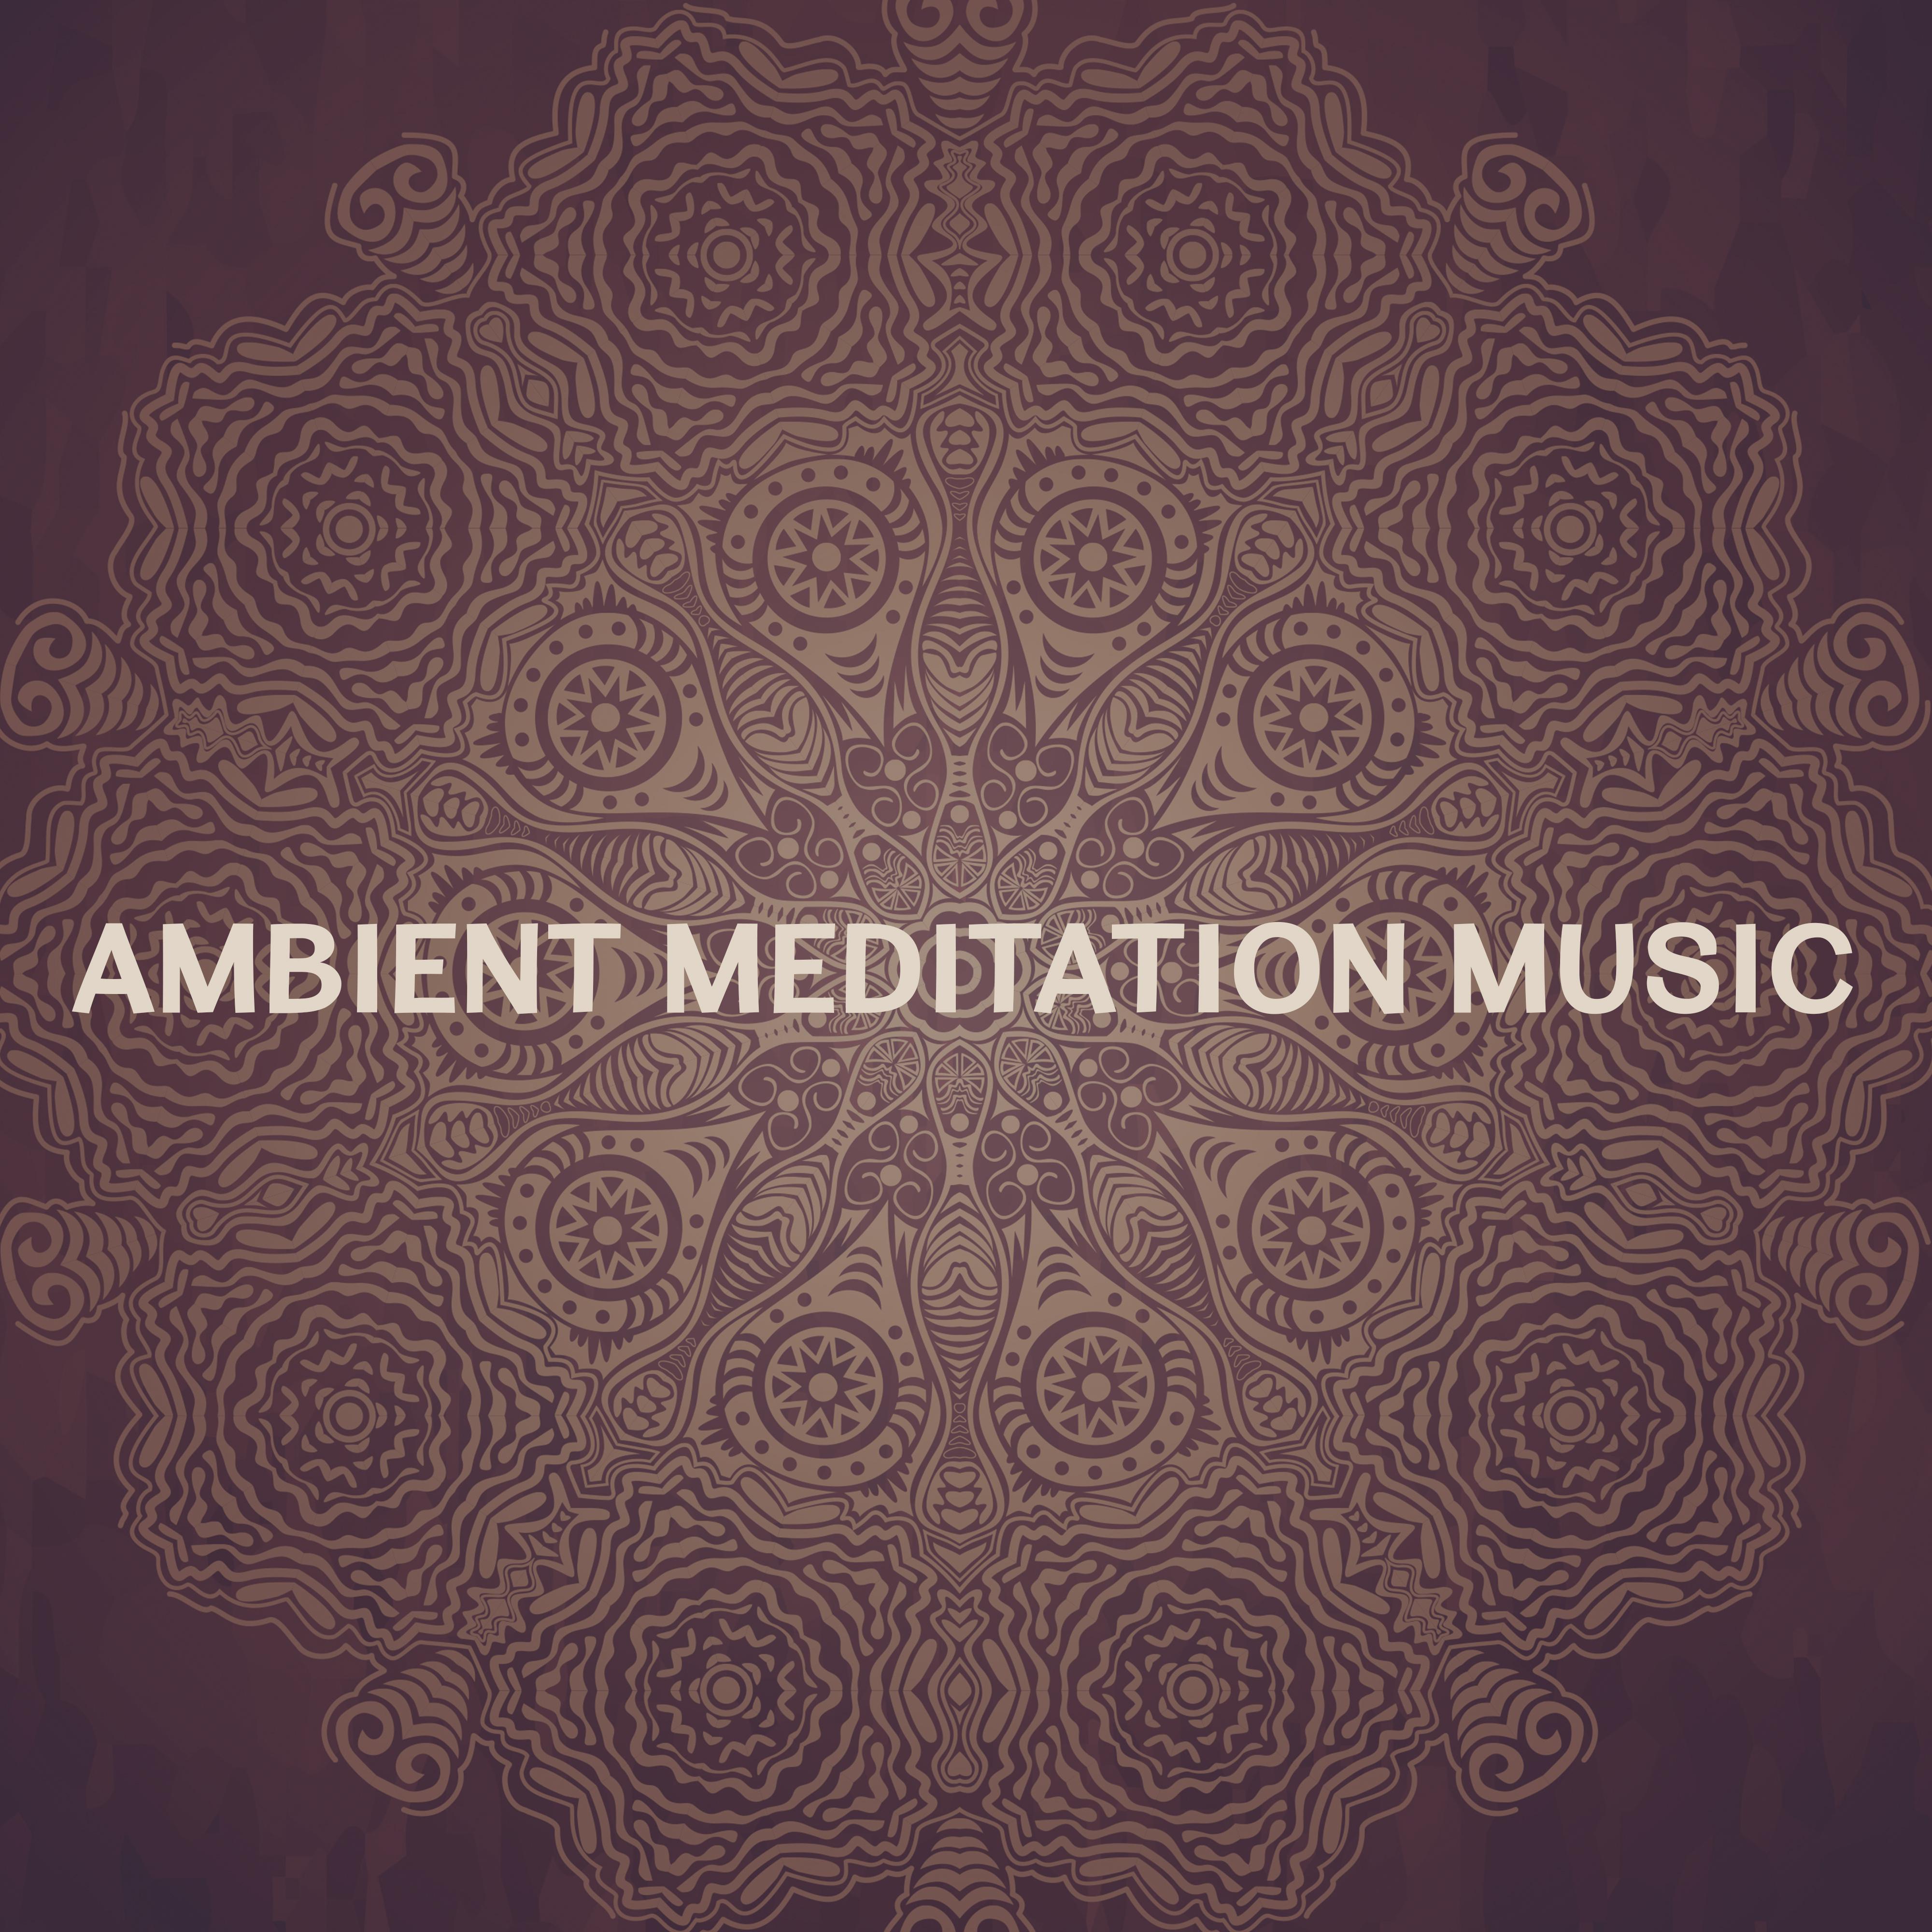 Ambient Meditation Music  Gentle Nature Sounds, Music for Meditation, Yoga, Pilates, Yoga Asanas, Yoga for Beginners